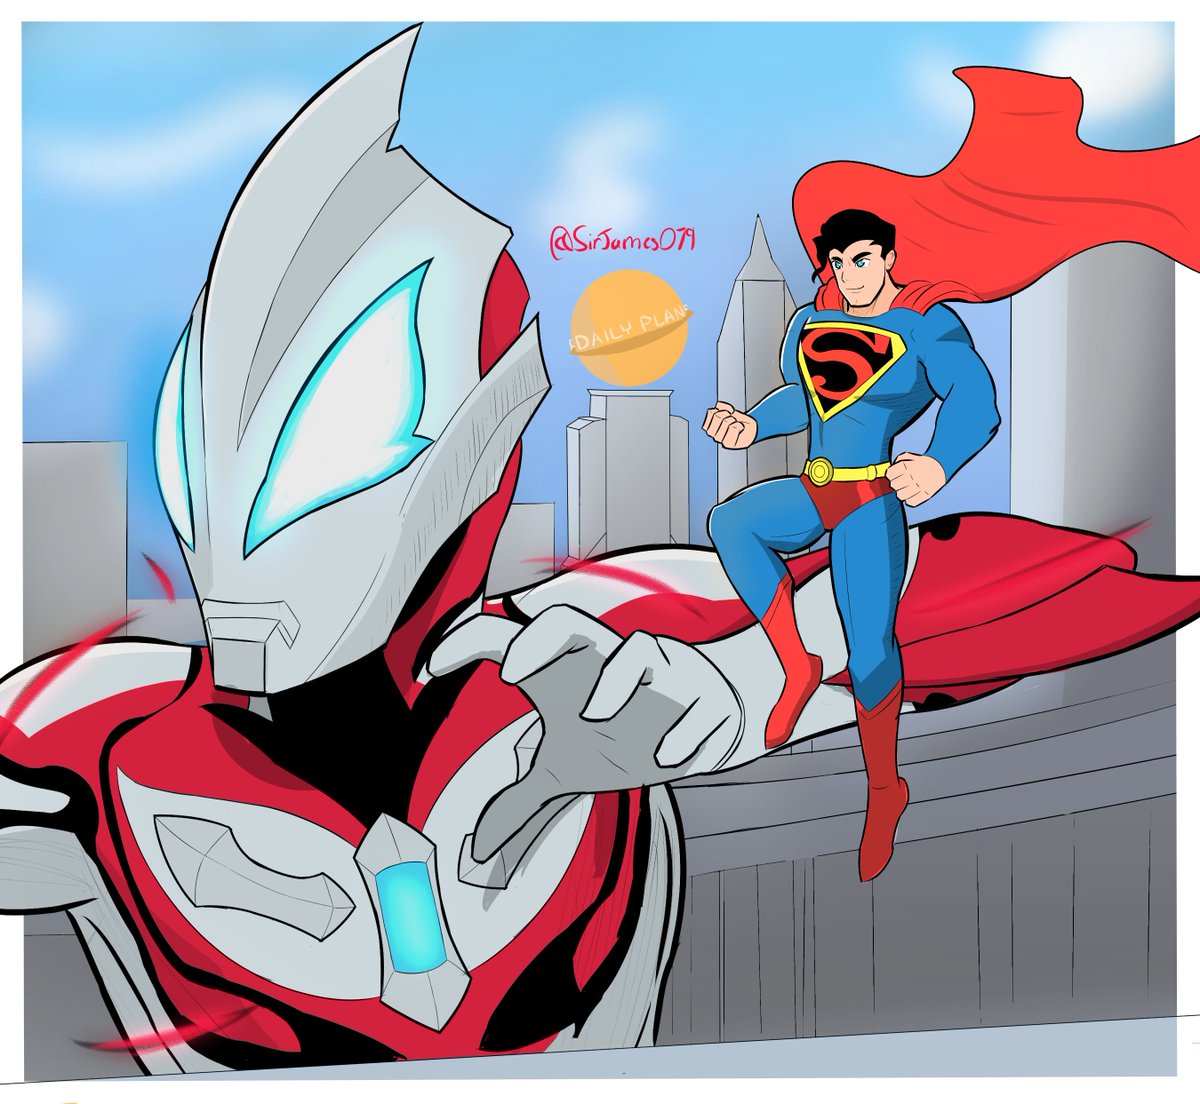 'Look, up in the sky! it's a bird, it's a plane, it's-

It's a giant?'  

A new hero arrives in Metropolis!

#Superman #Ultraman